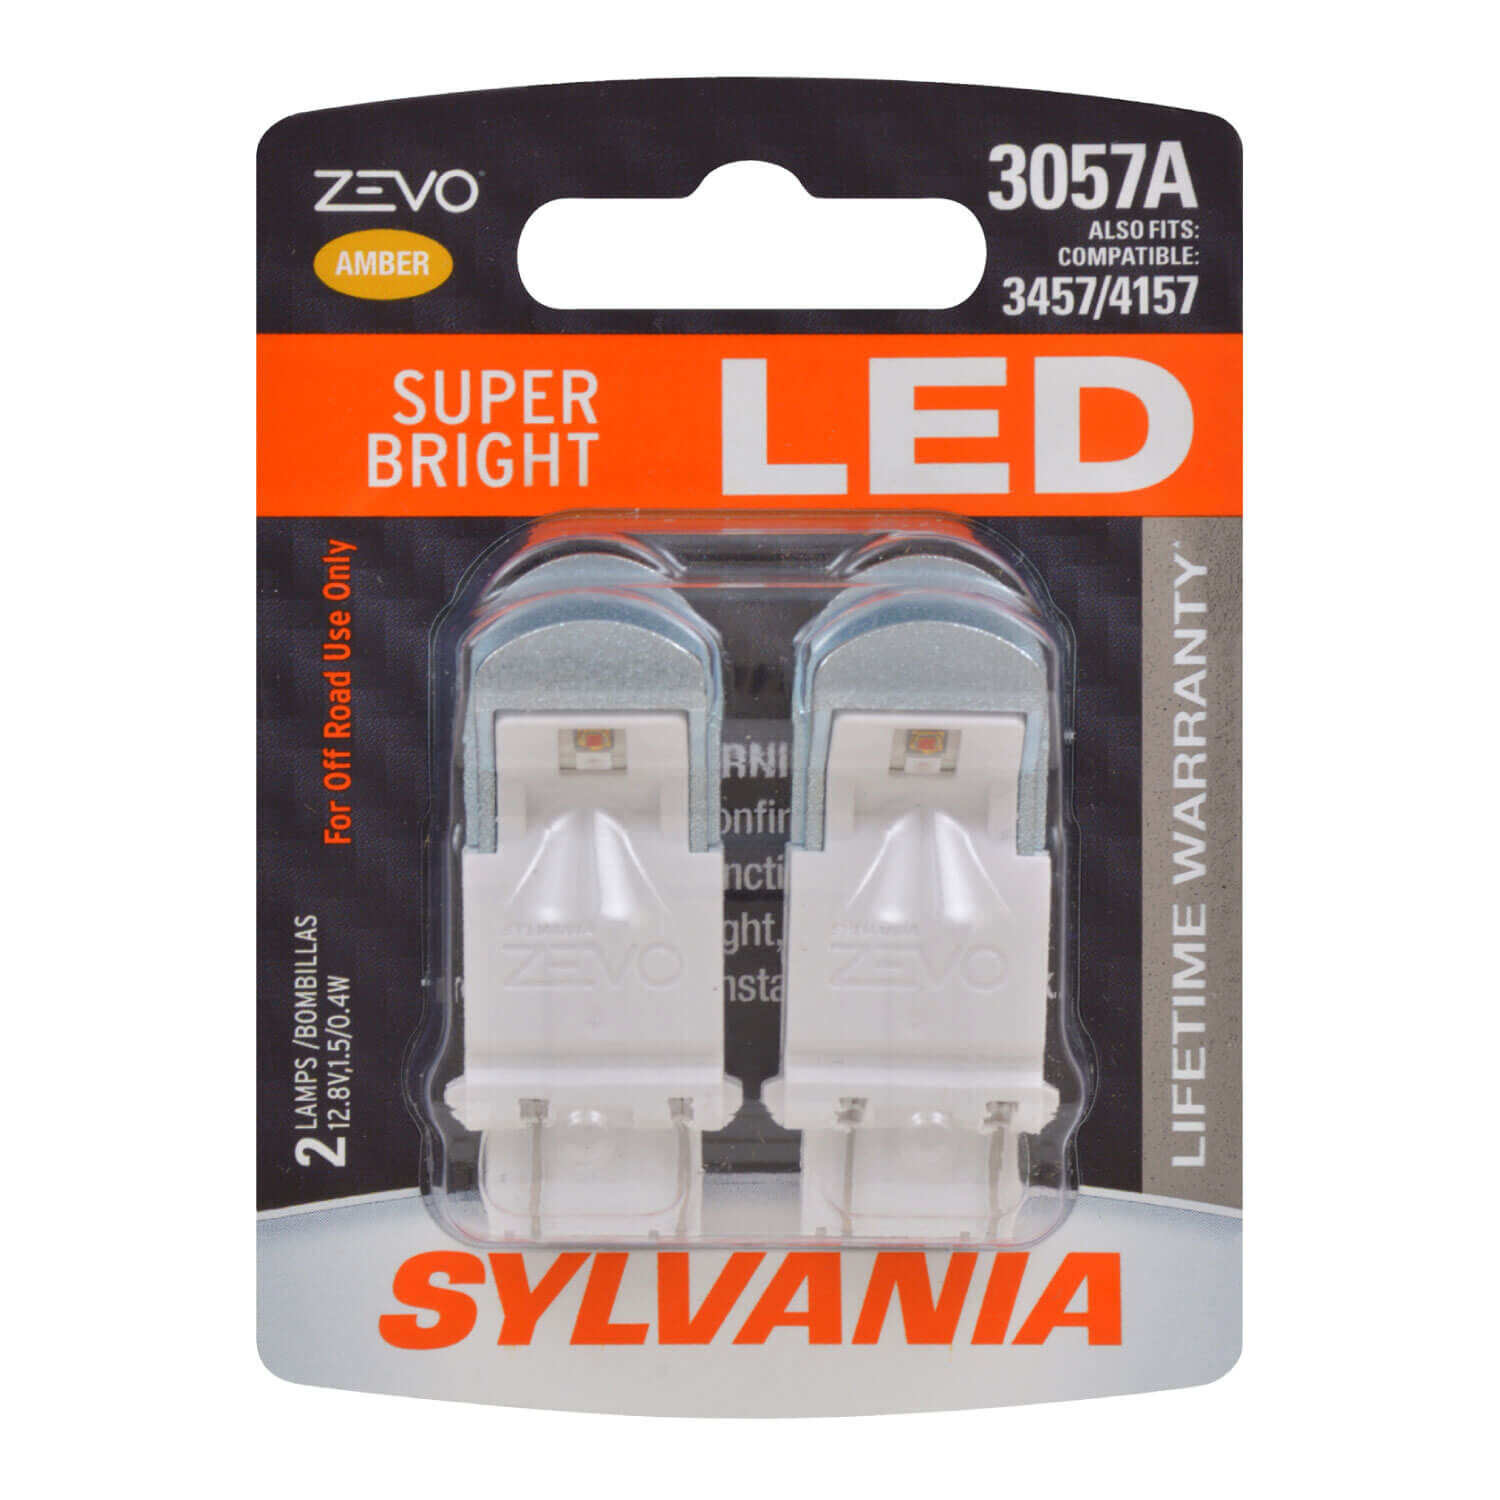 Bright LED Bulb Ideal for Park and Turn Lights 1157 ZEVO LED Amber Bulb Contains 2 Bulbs SYLVANIA 